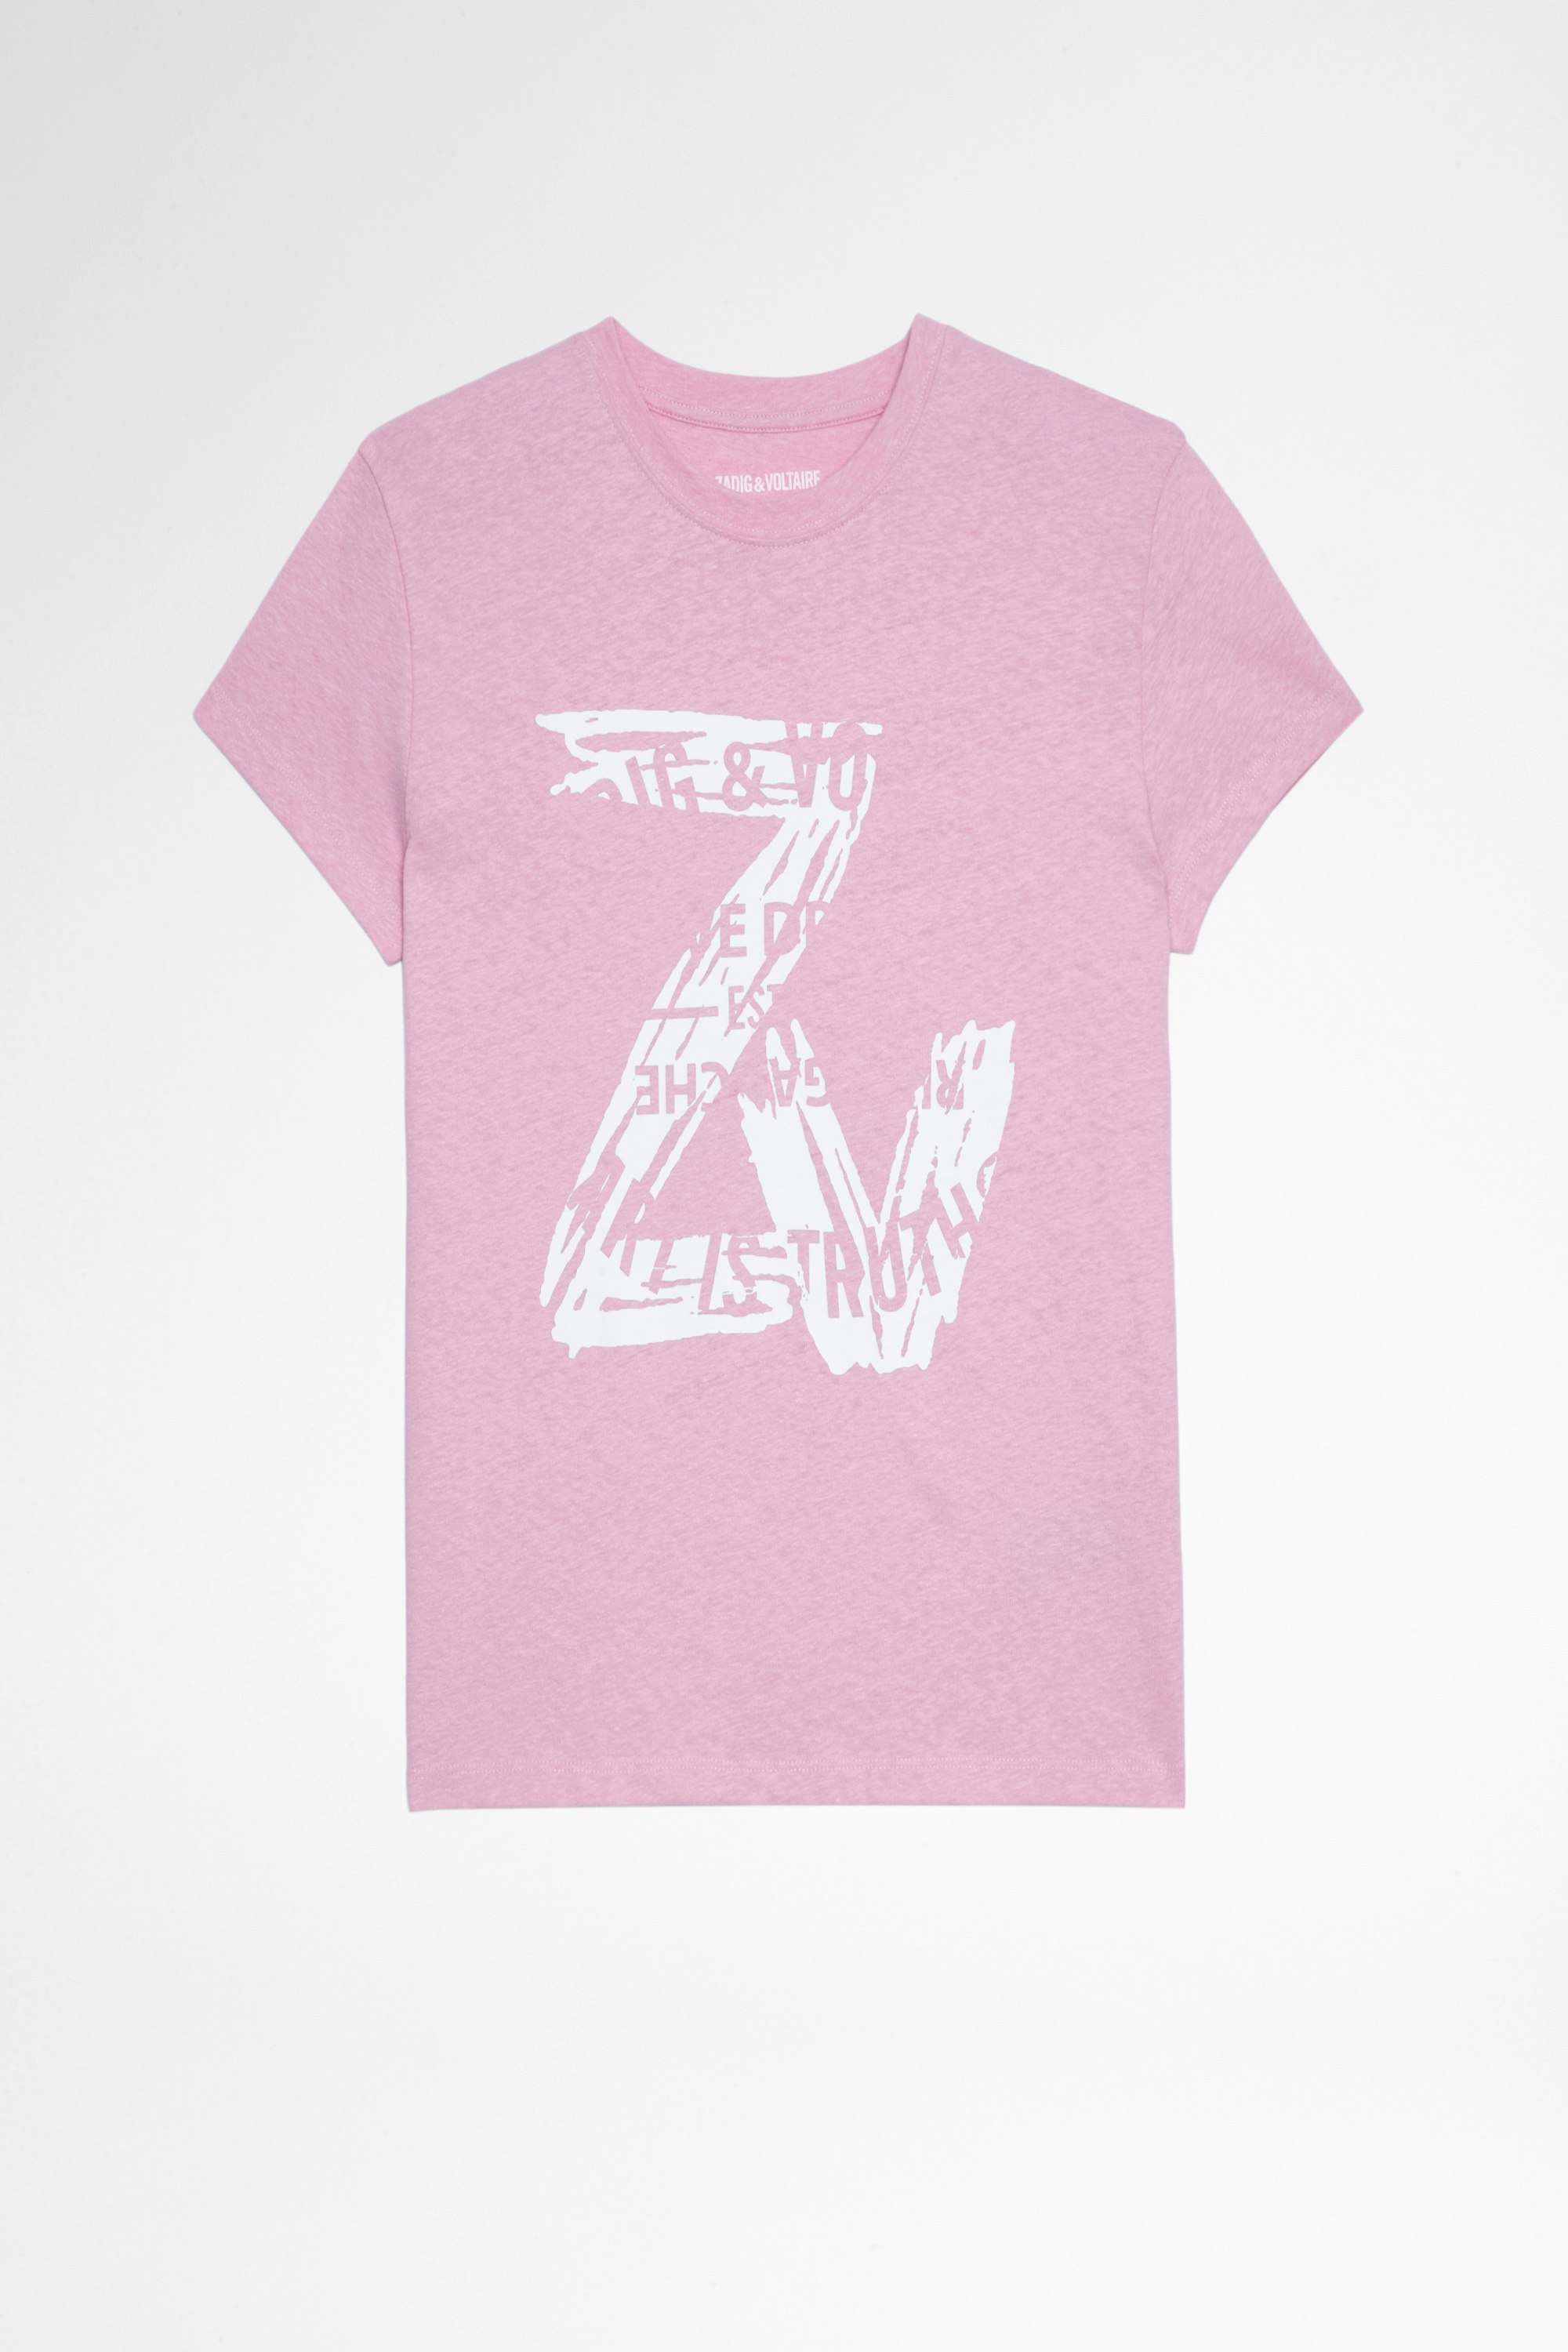 Camiseta Zoe ZV New Blason  Camiseta de algodón rosa pálido con impresión ZV para mujer 